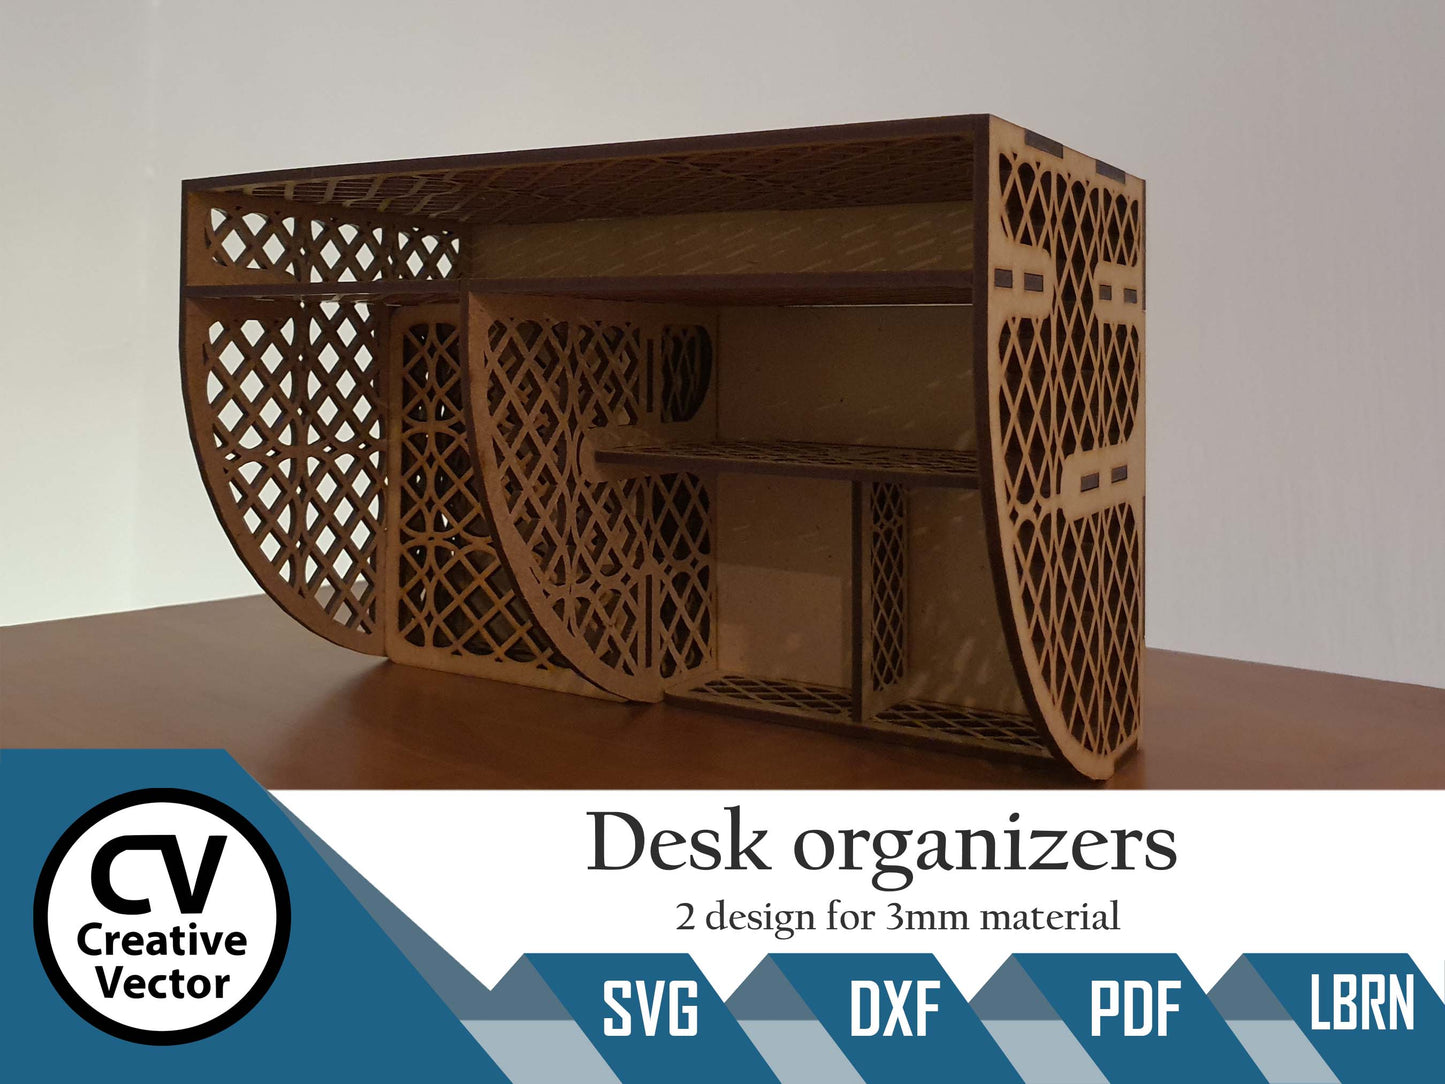 Desk organizers 2 designs